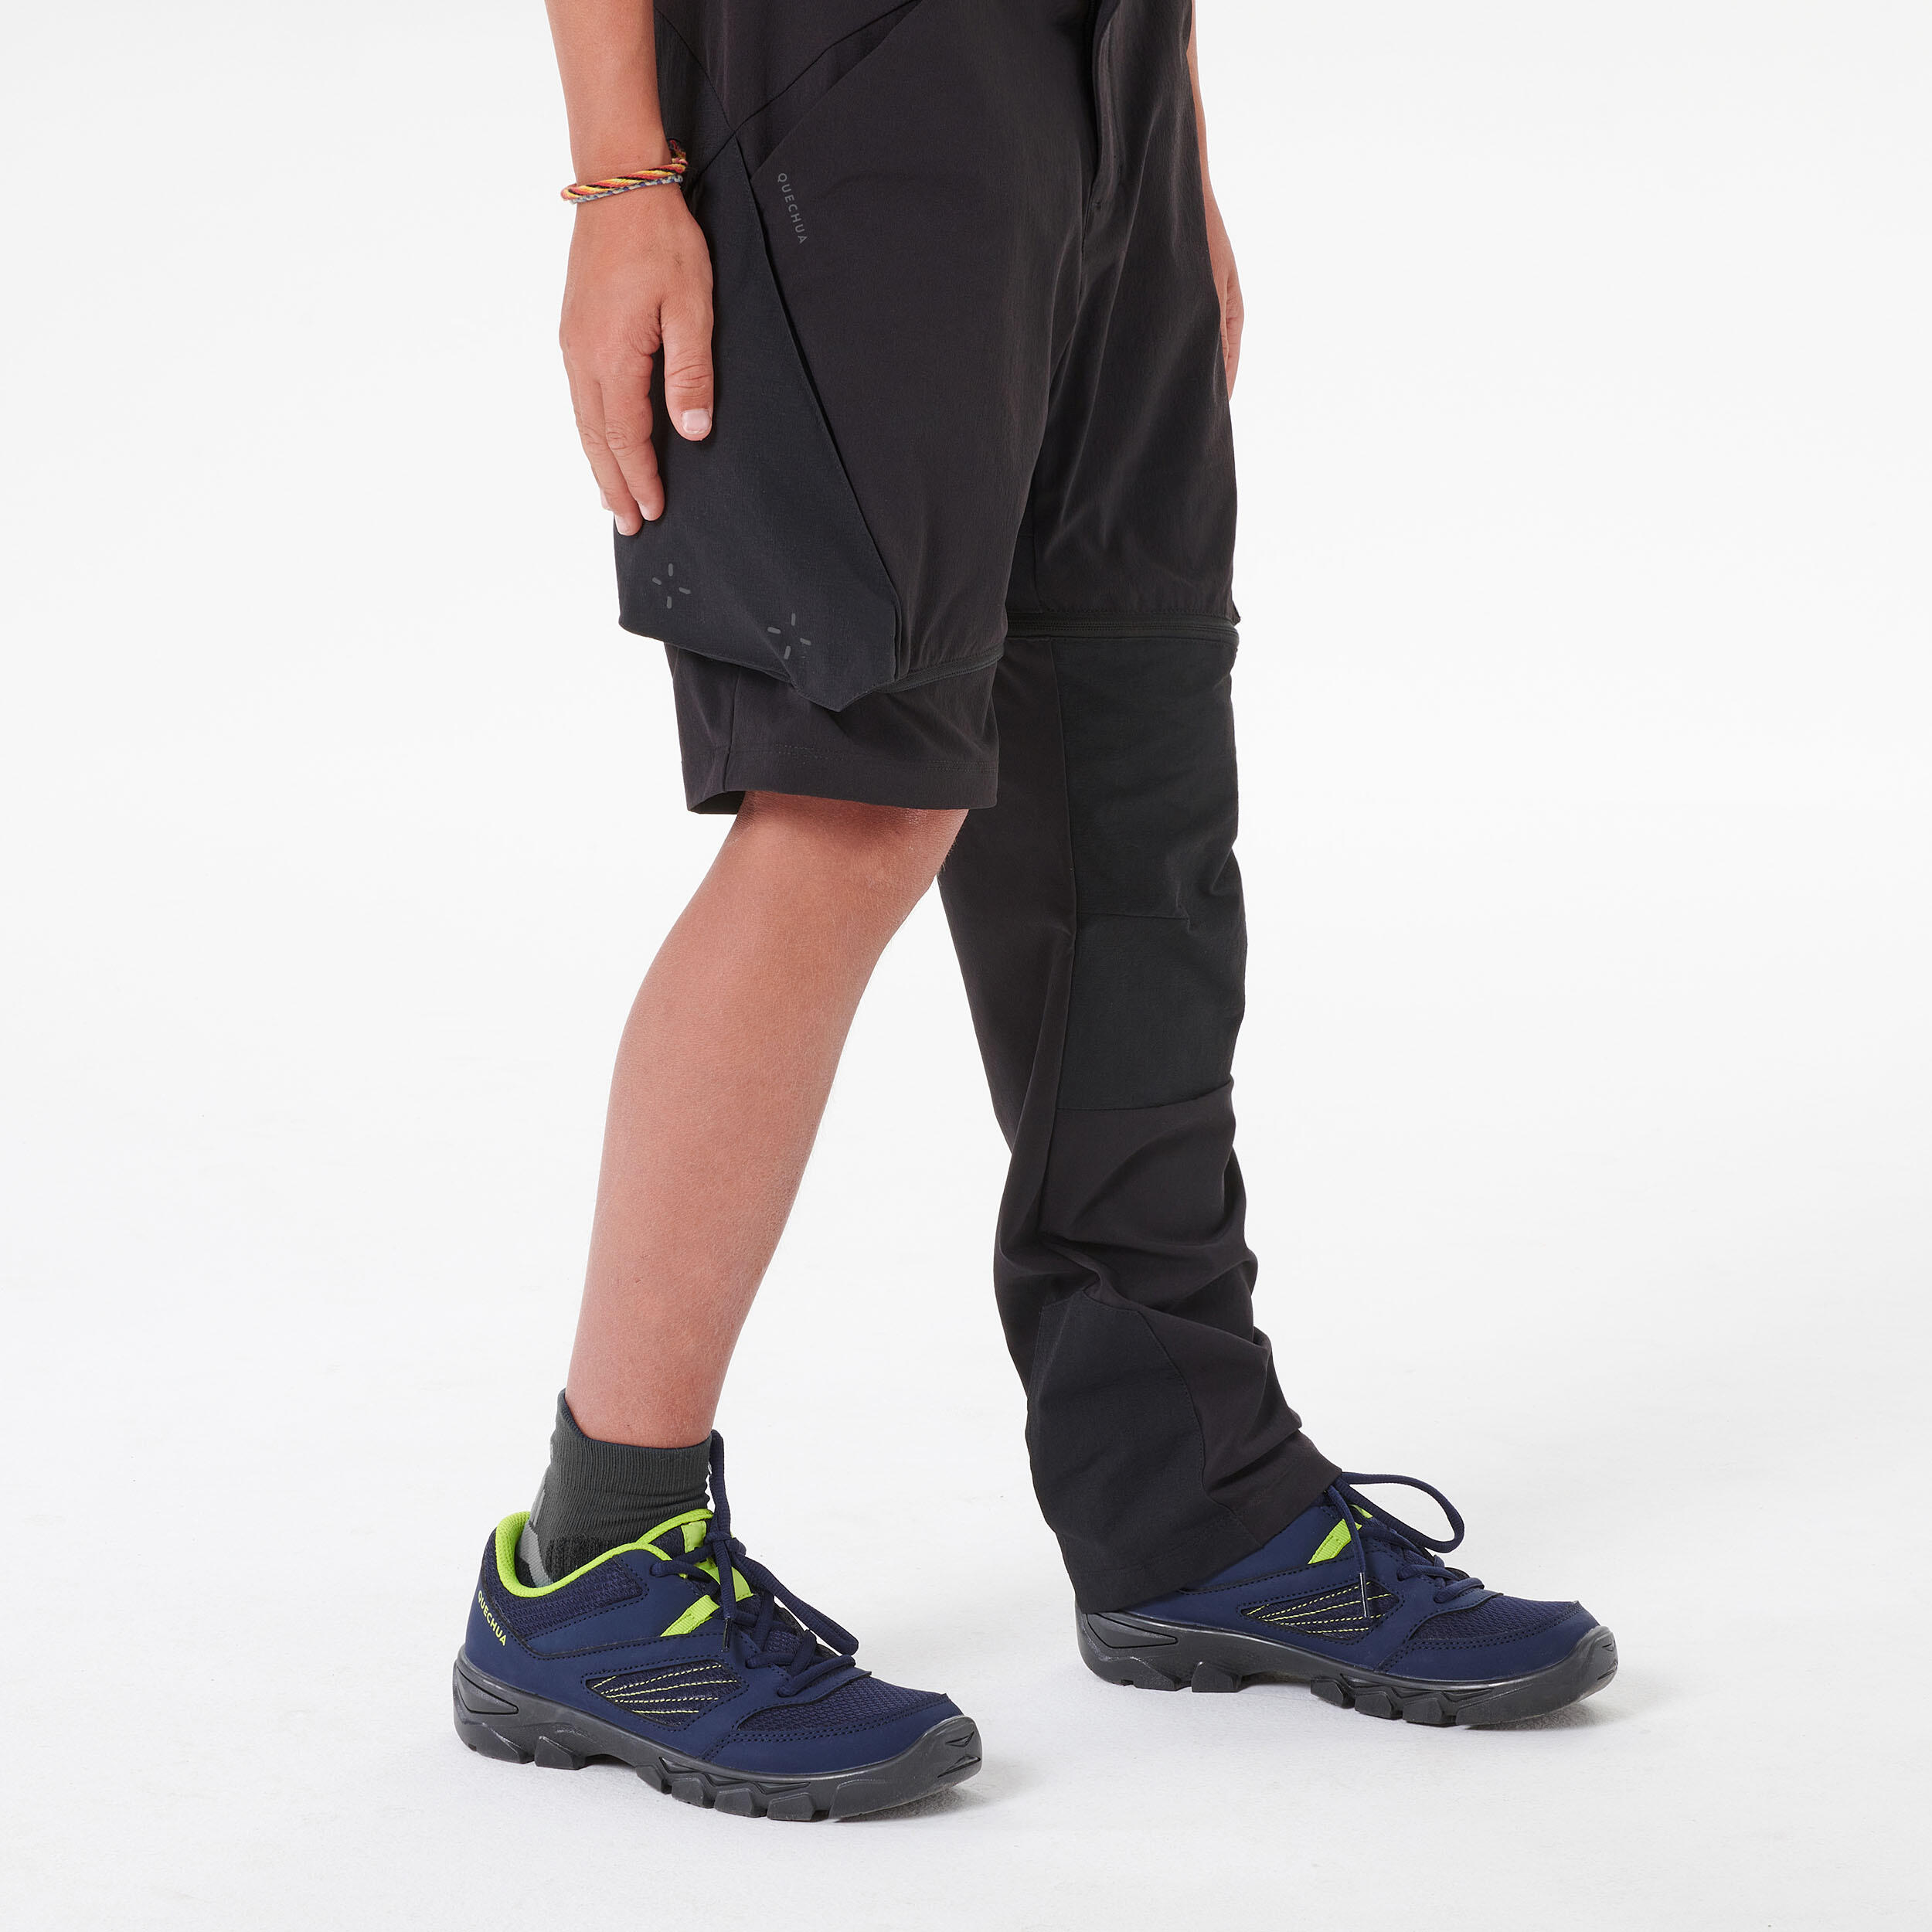 Kids’ Modular Hiking Trousers MH500 ONEZIP Aged 7-15 - Black 10/15